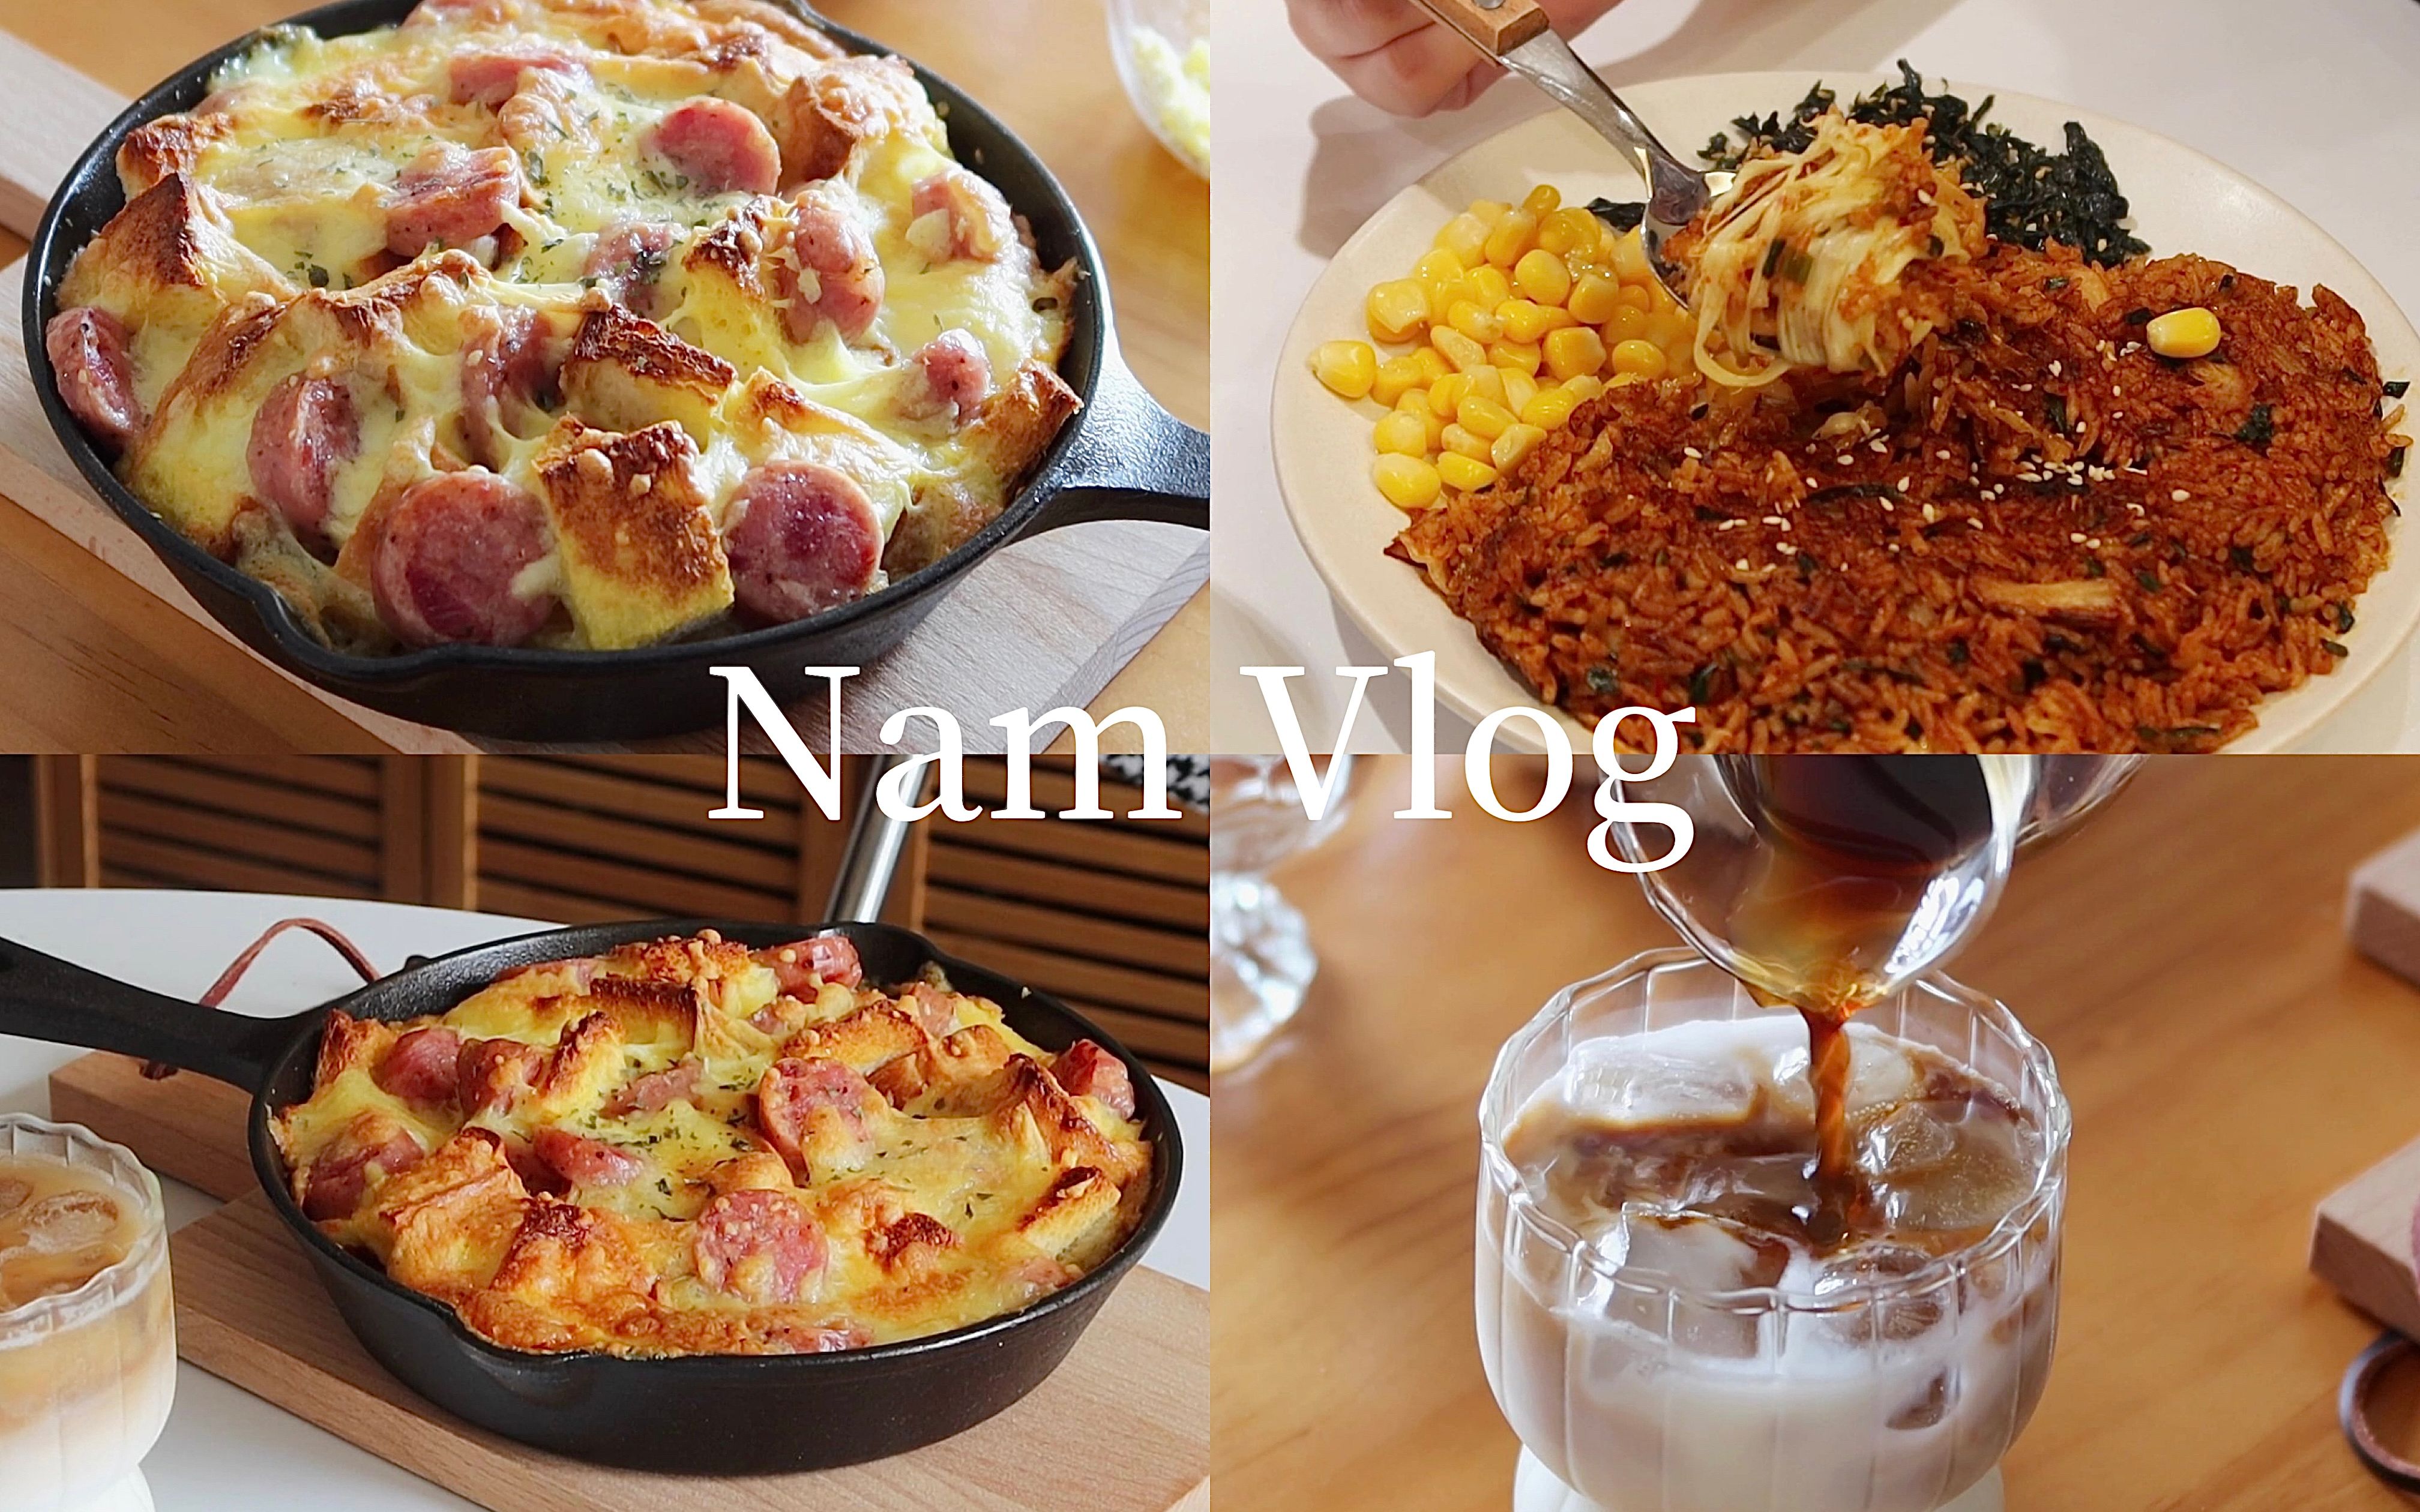 Nam Vlog02丨独居治愈日常饮食·姜食堂po芝士泡菜炒饭·吐司布丁·冰拿铁和冰可乐·离不开冰块的生活·让生活慢悠悠的吧